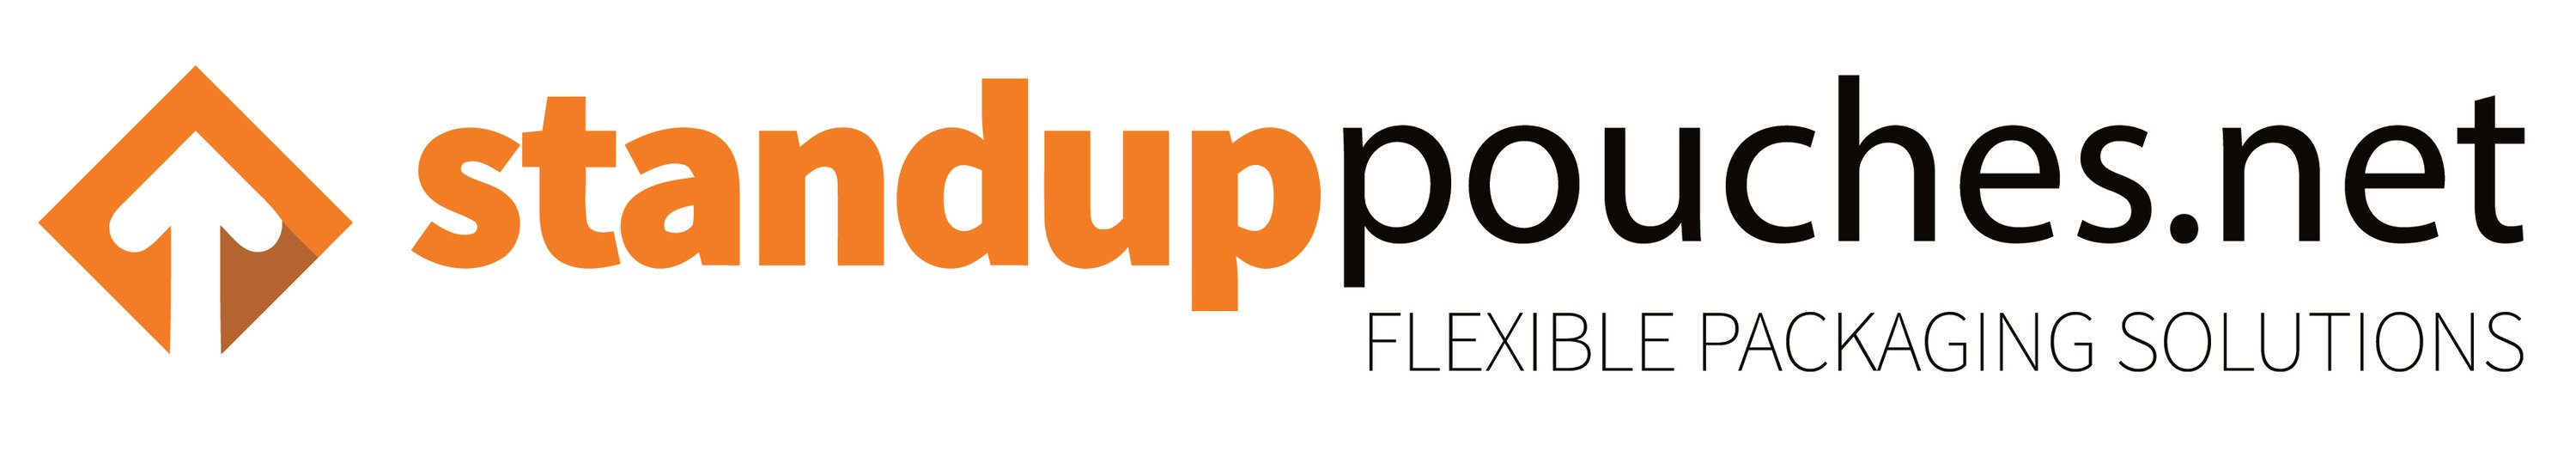 sup-logo-2015_CMYK.jpg